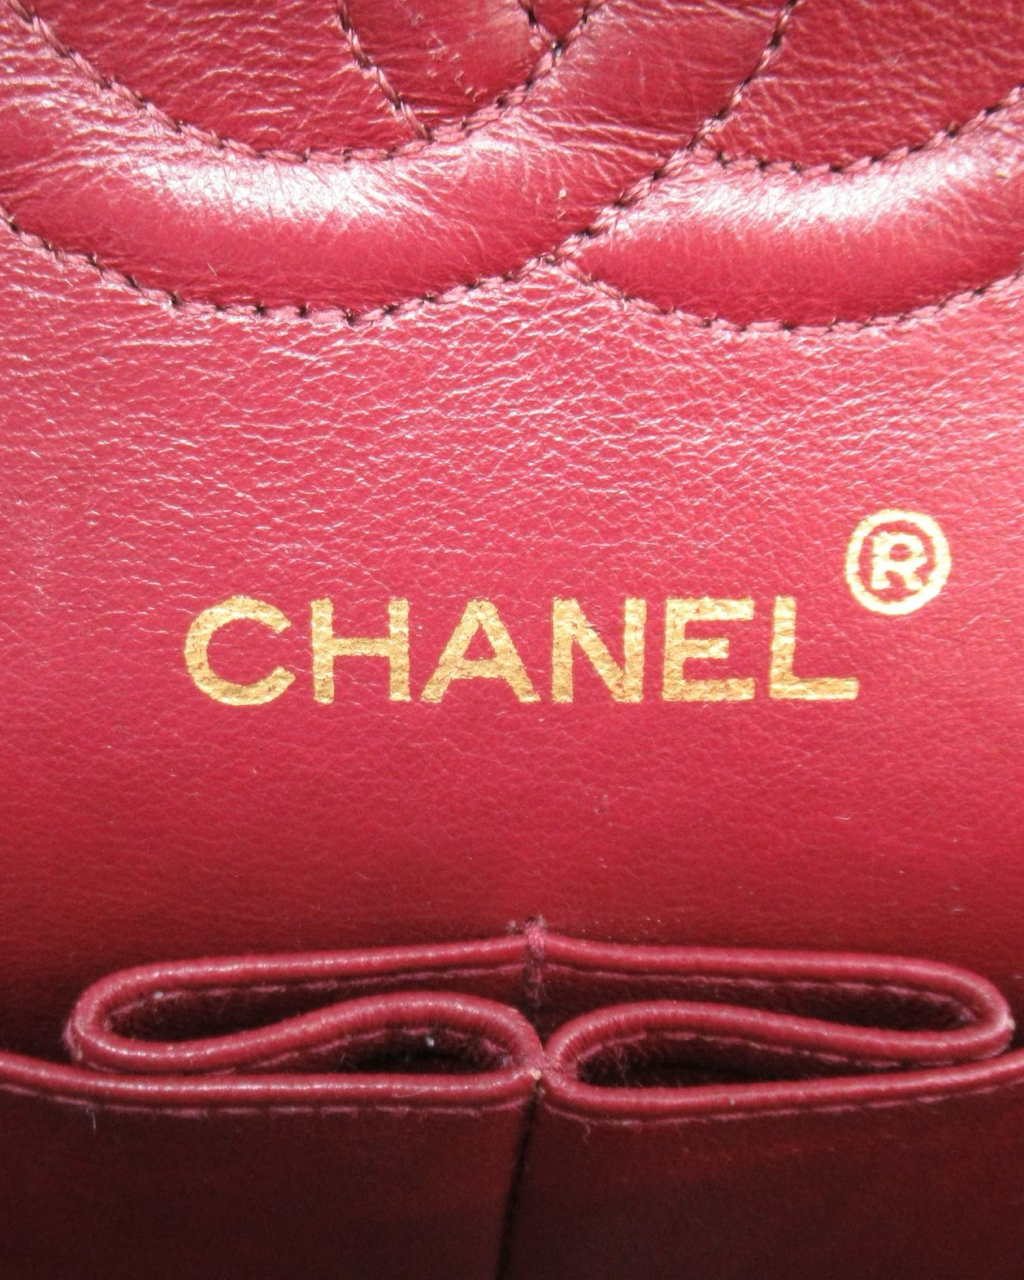 Bolsa Chanel Classic Double Flap